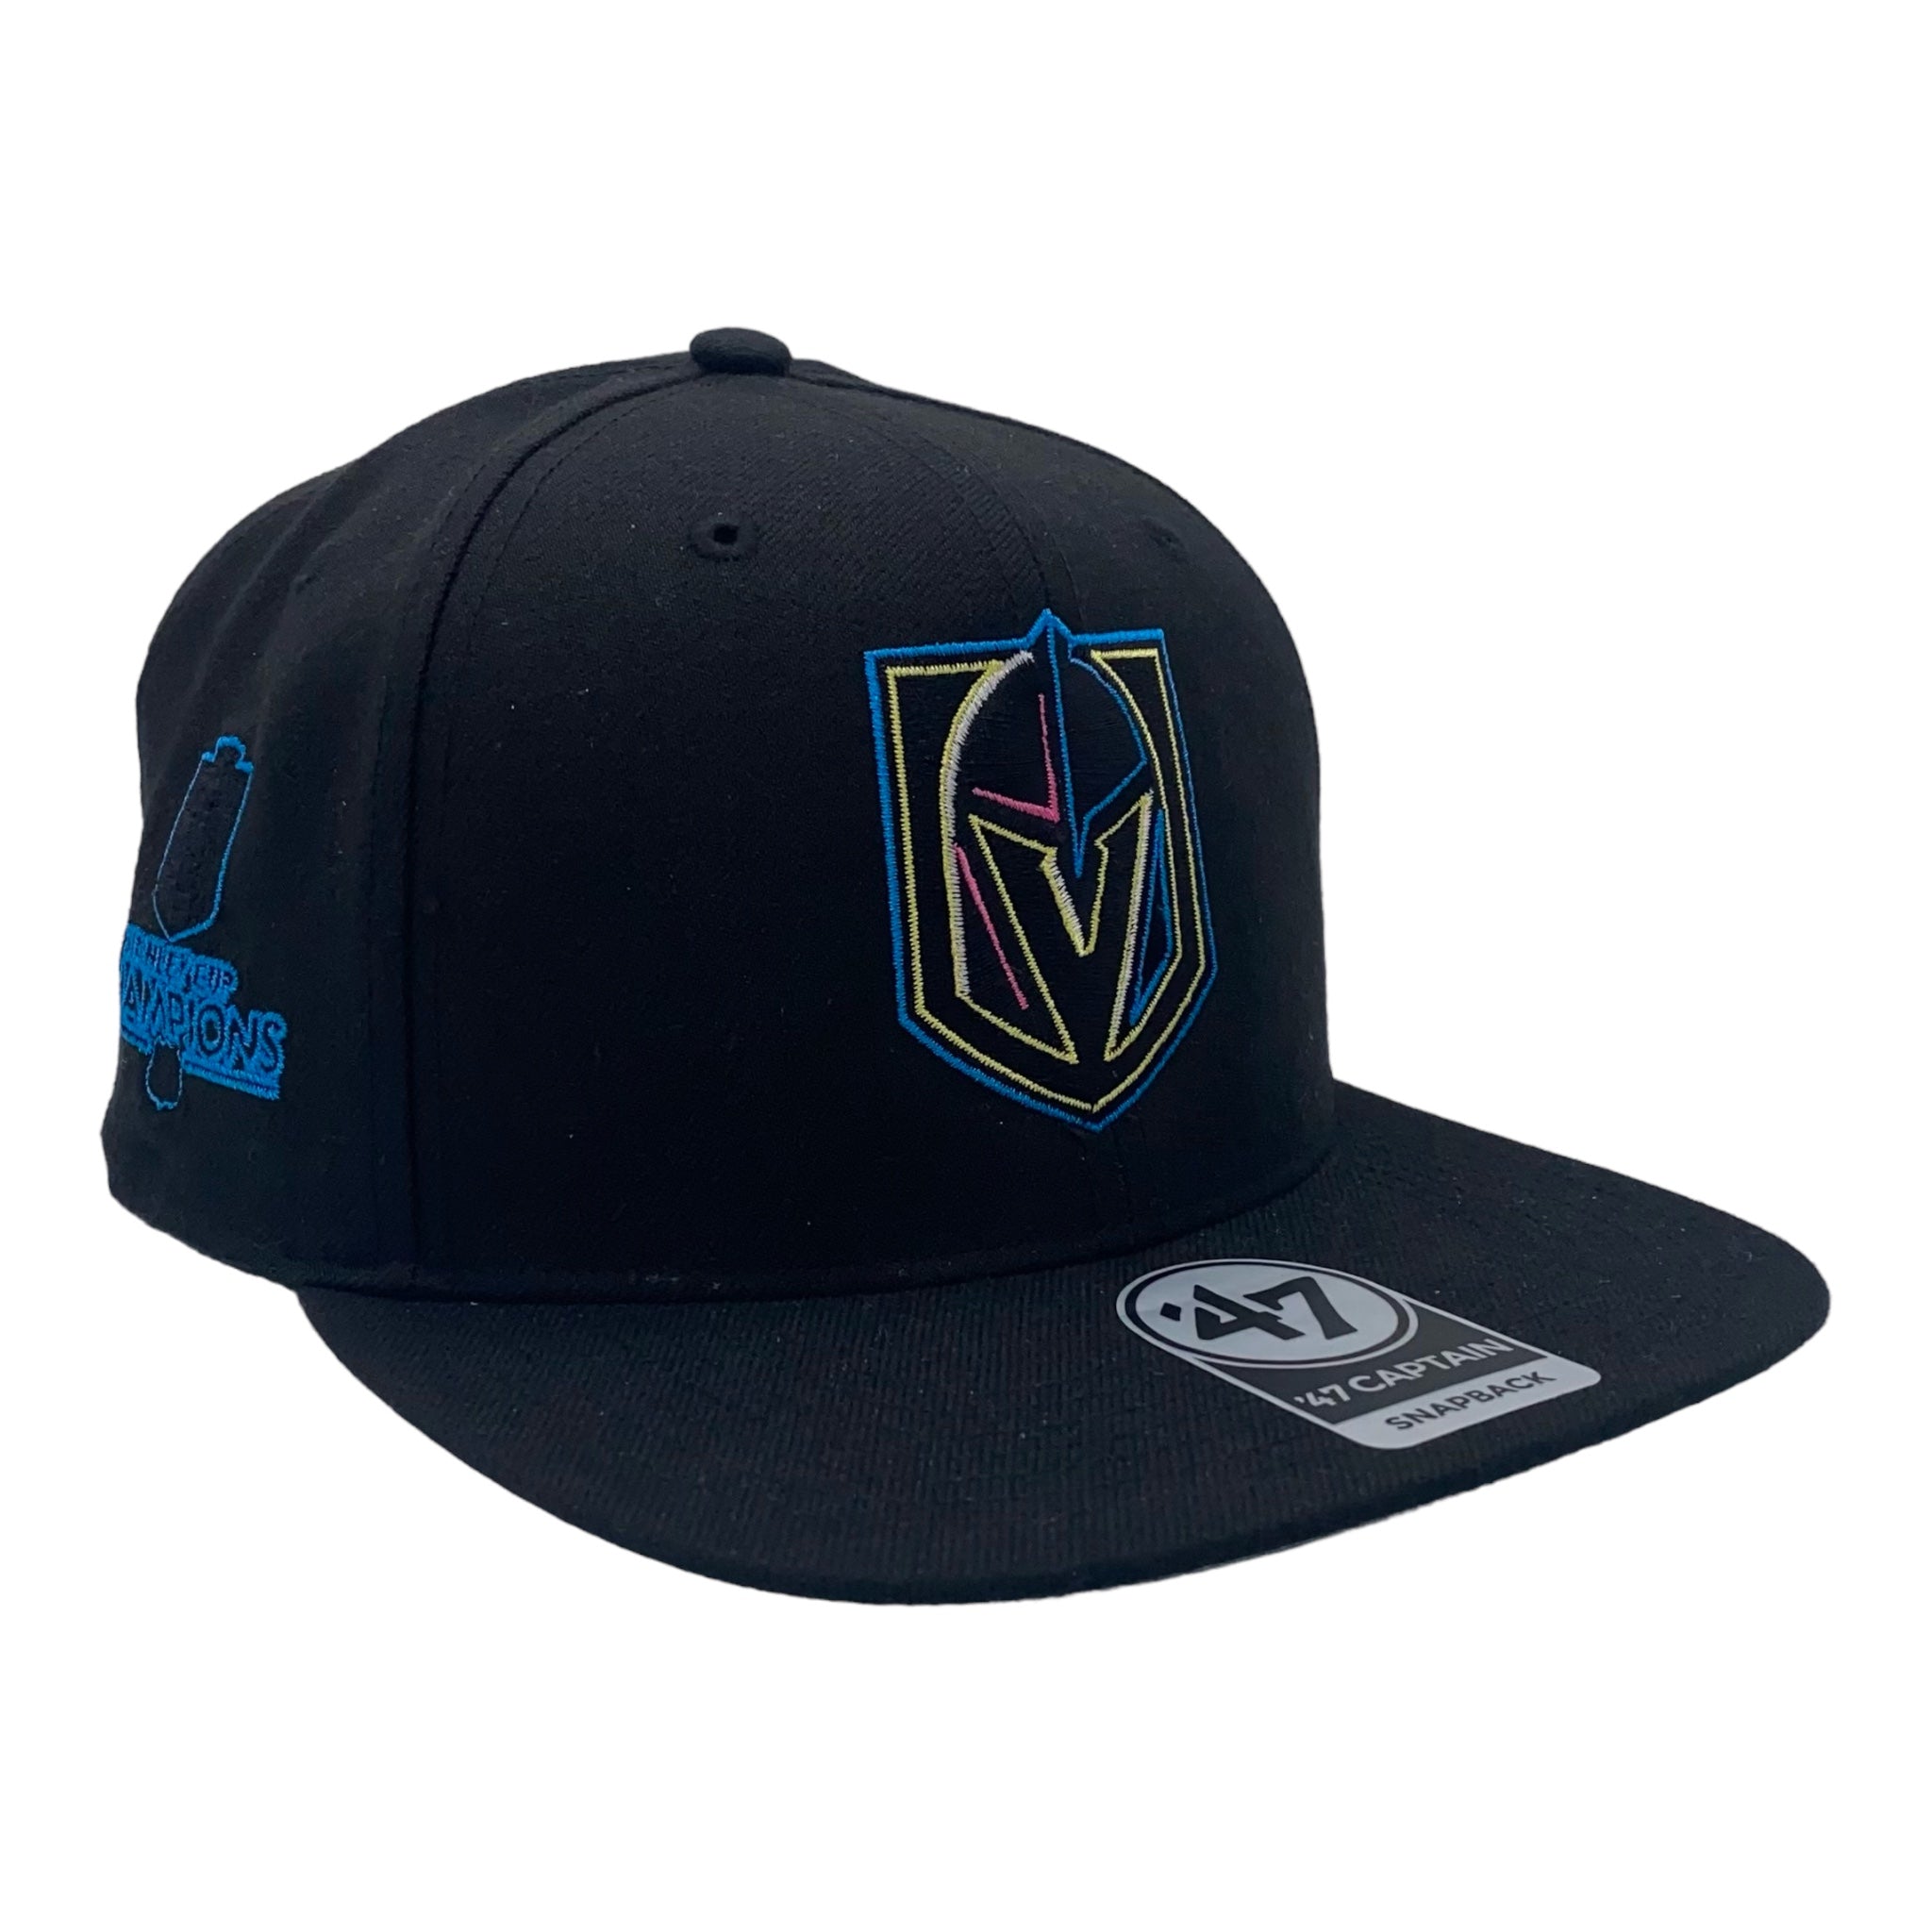 Vegas Golden Knights '47 Brand Neon Snapback Hat